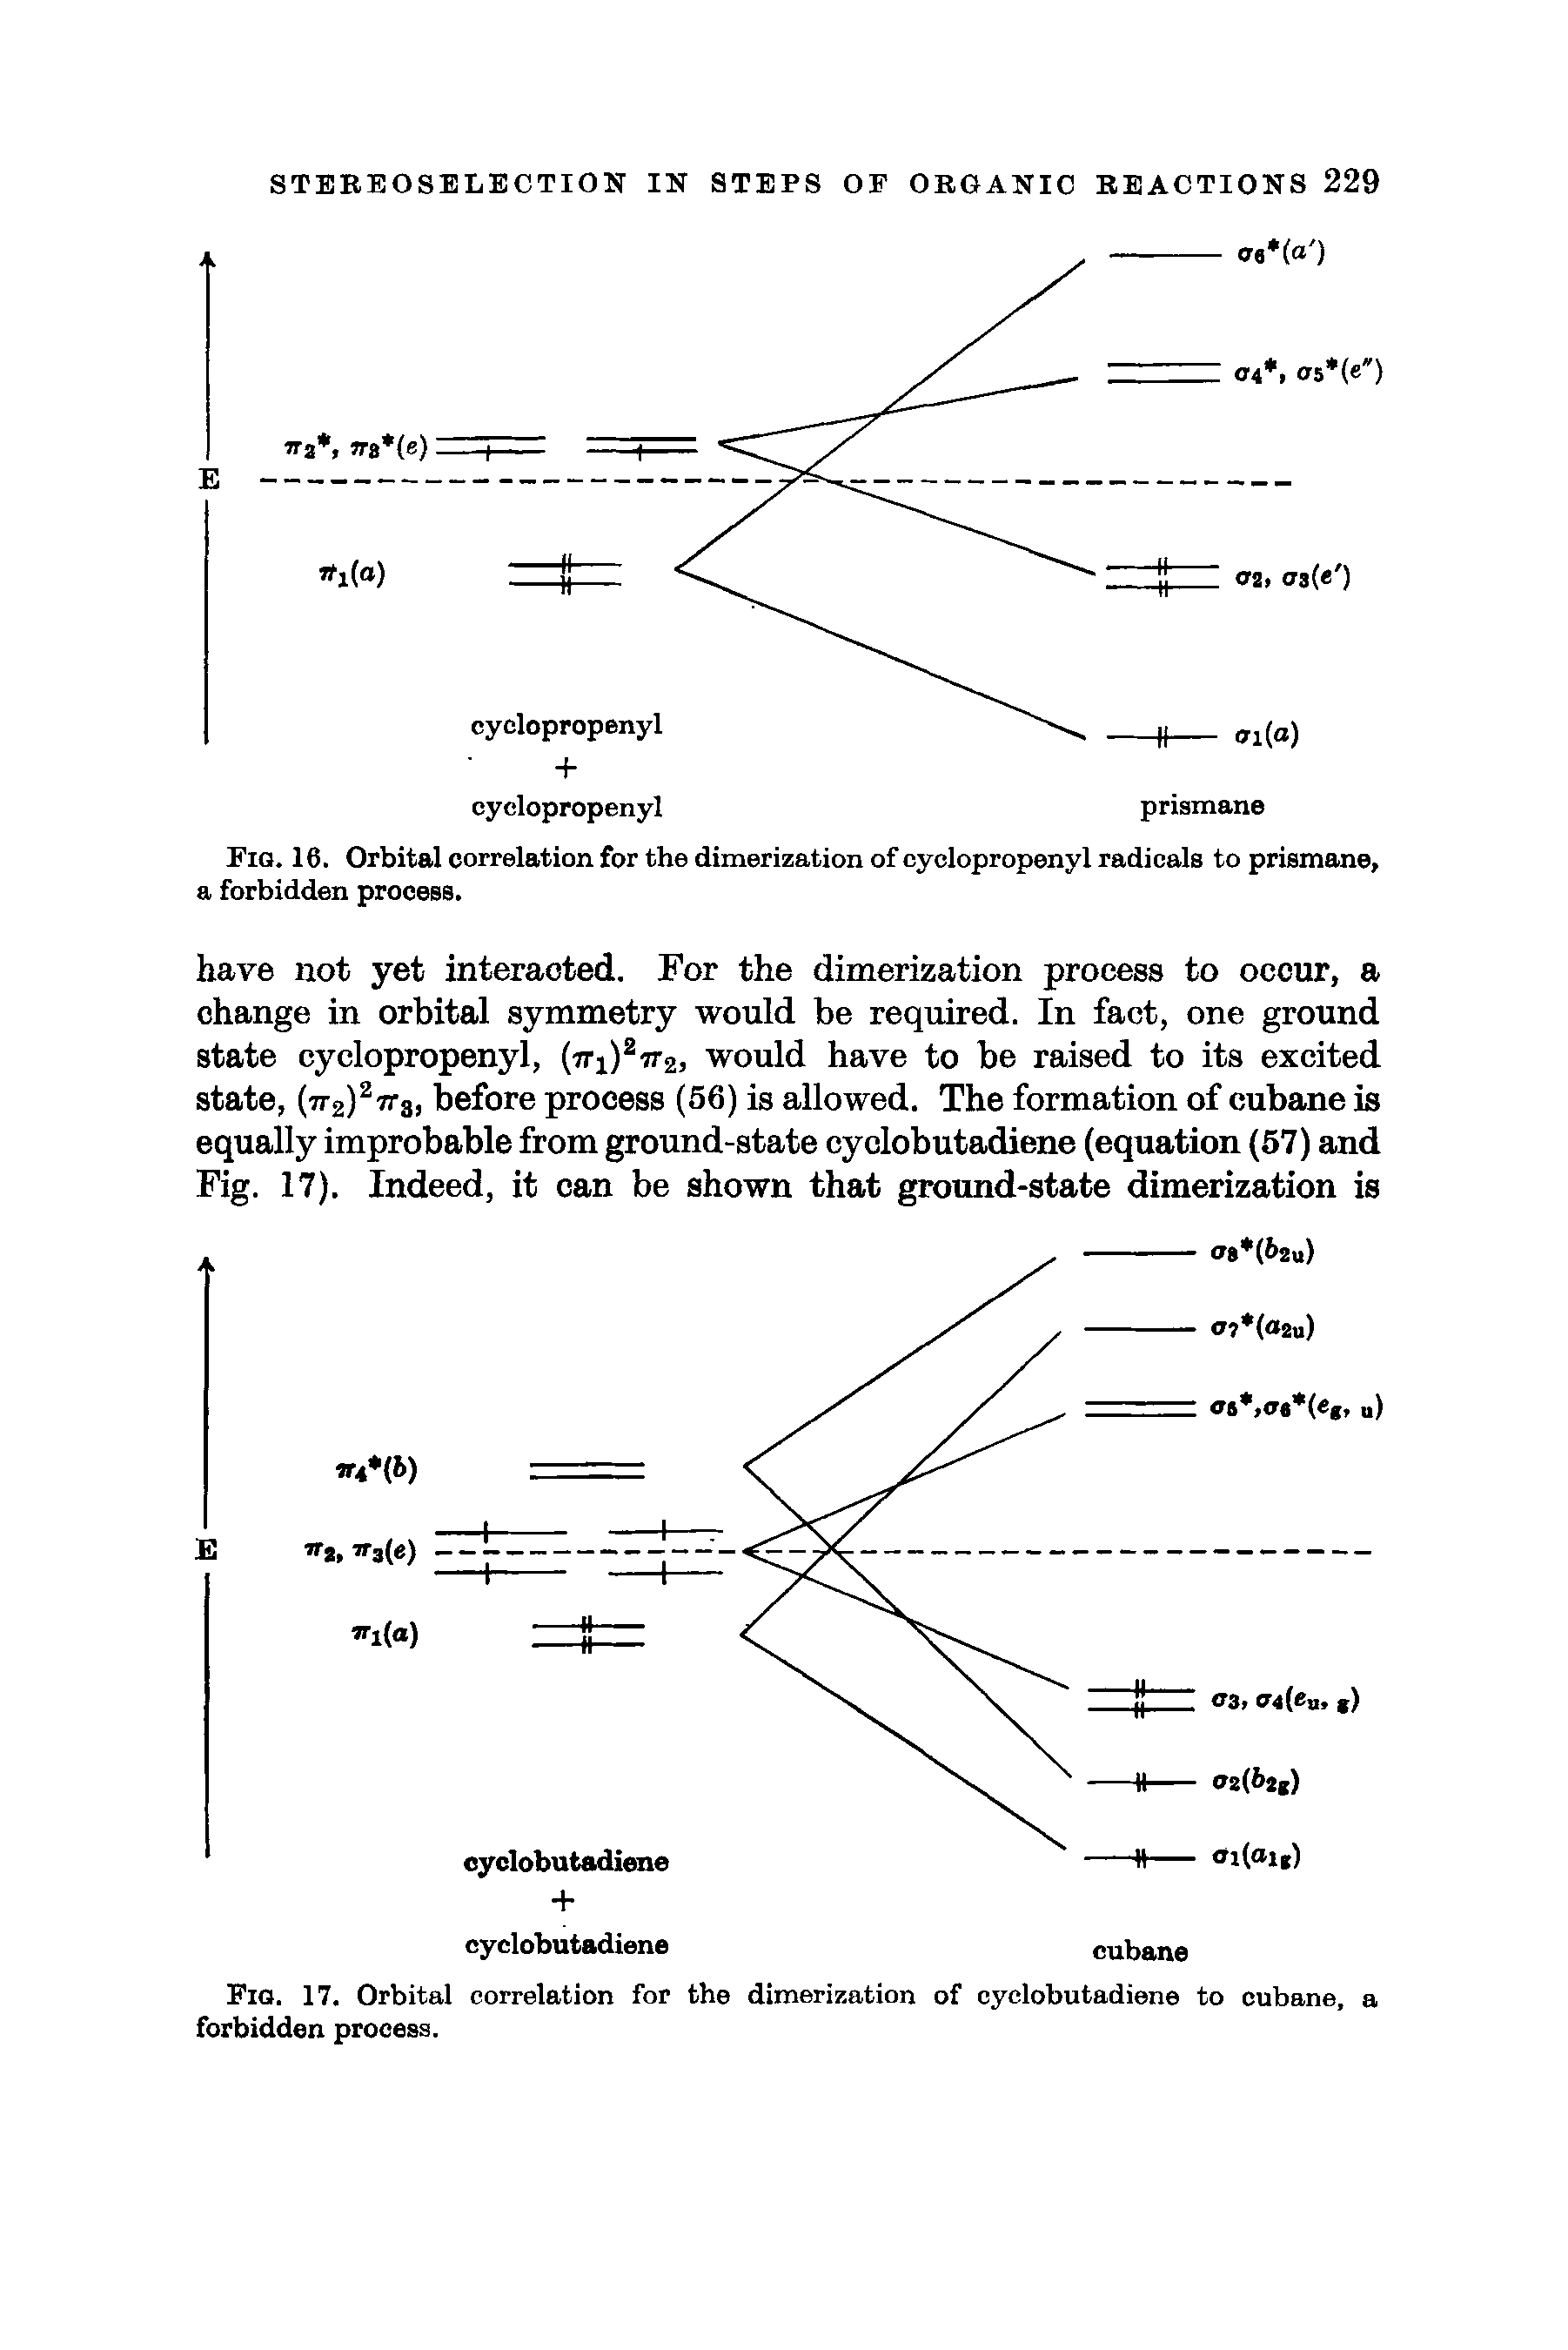 Fig. 17. Orbital correlation for the dimerization of cyclobutadiene to cubane, a forbidden process.